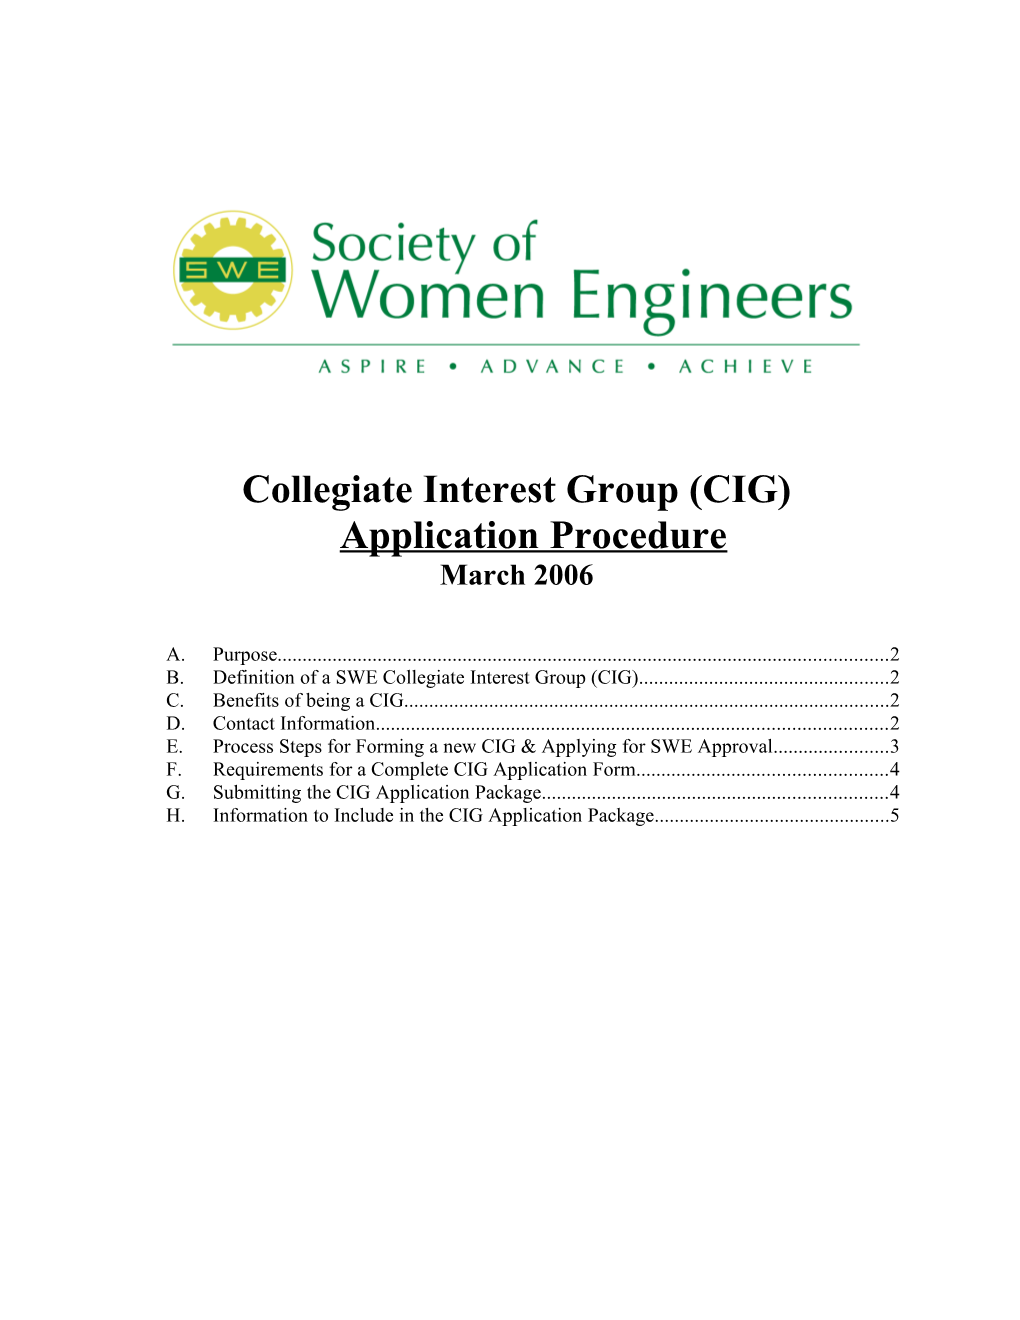 SWE Collegiate Interest Group (CIG) s1